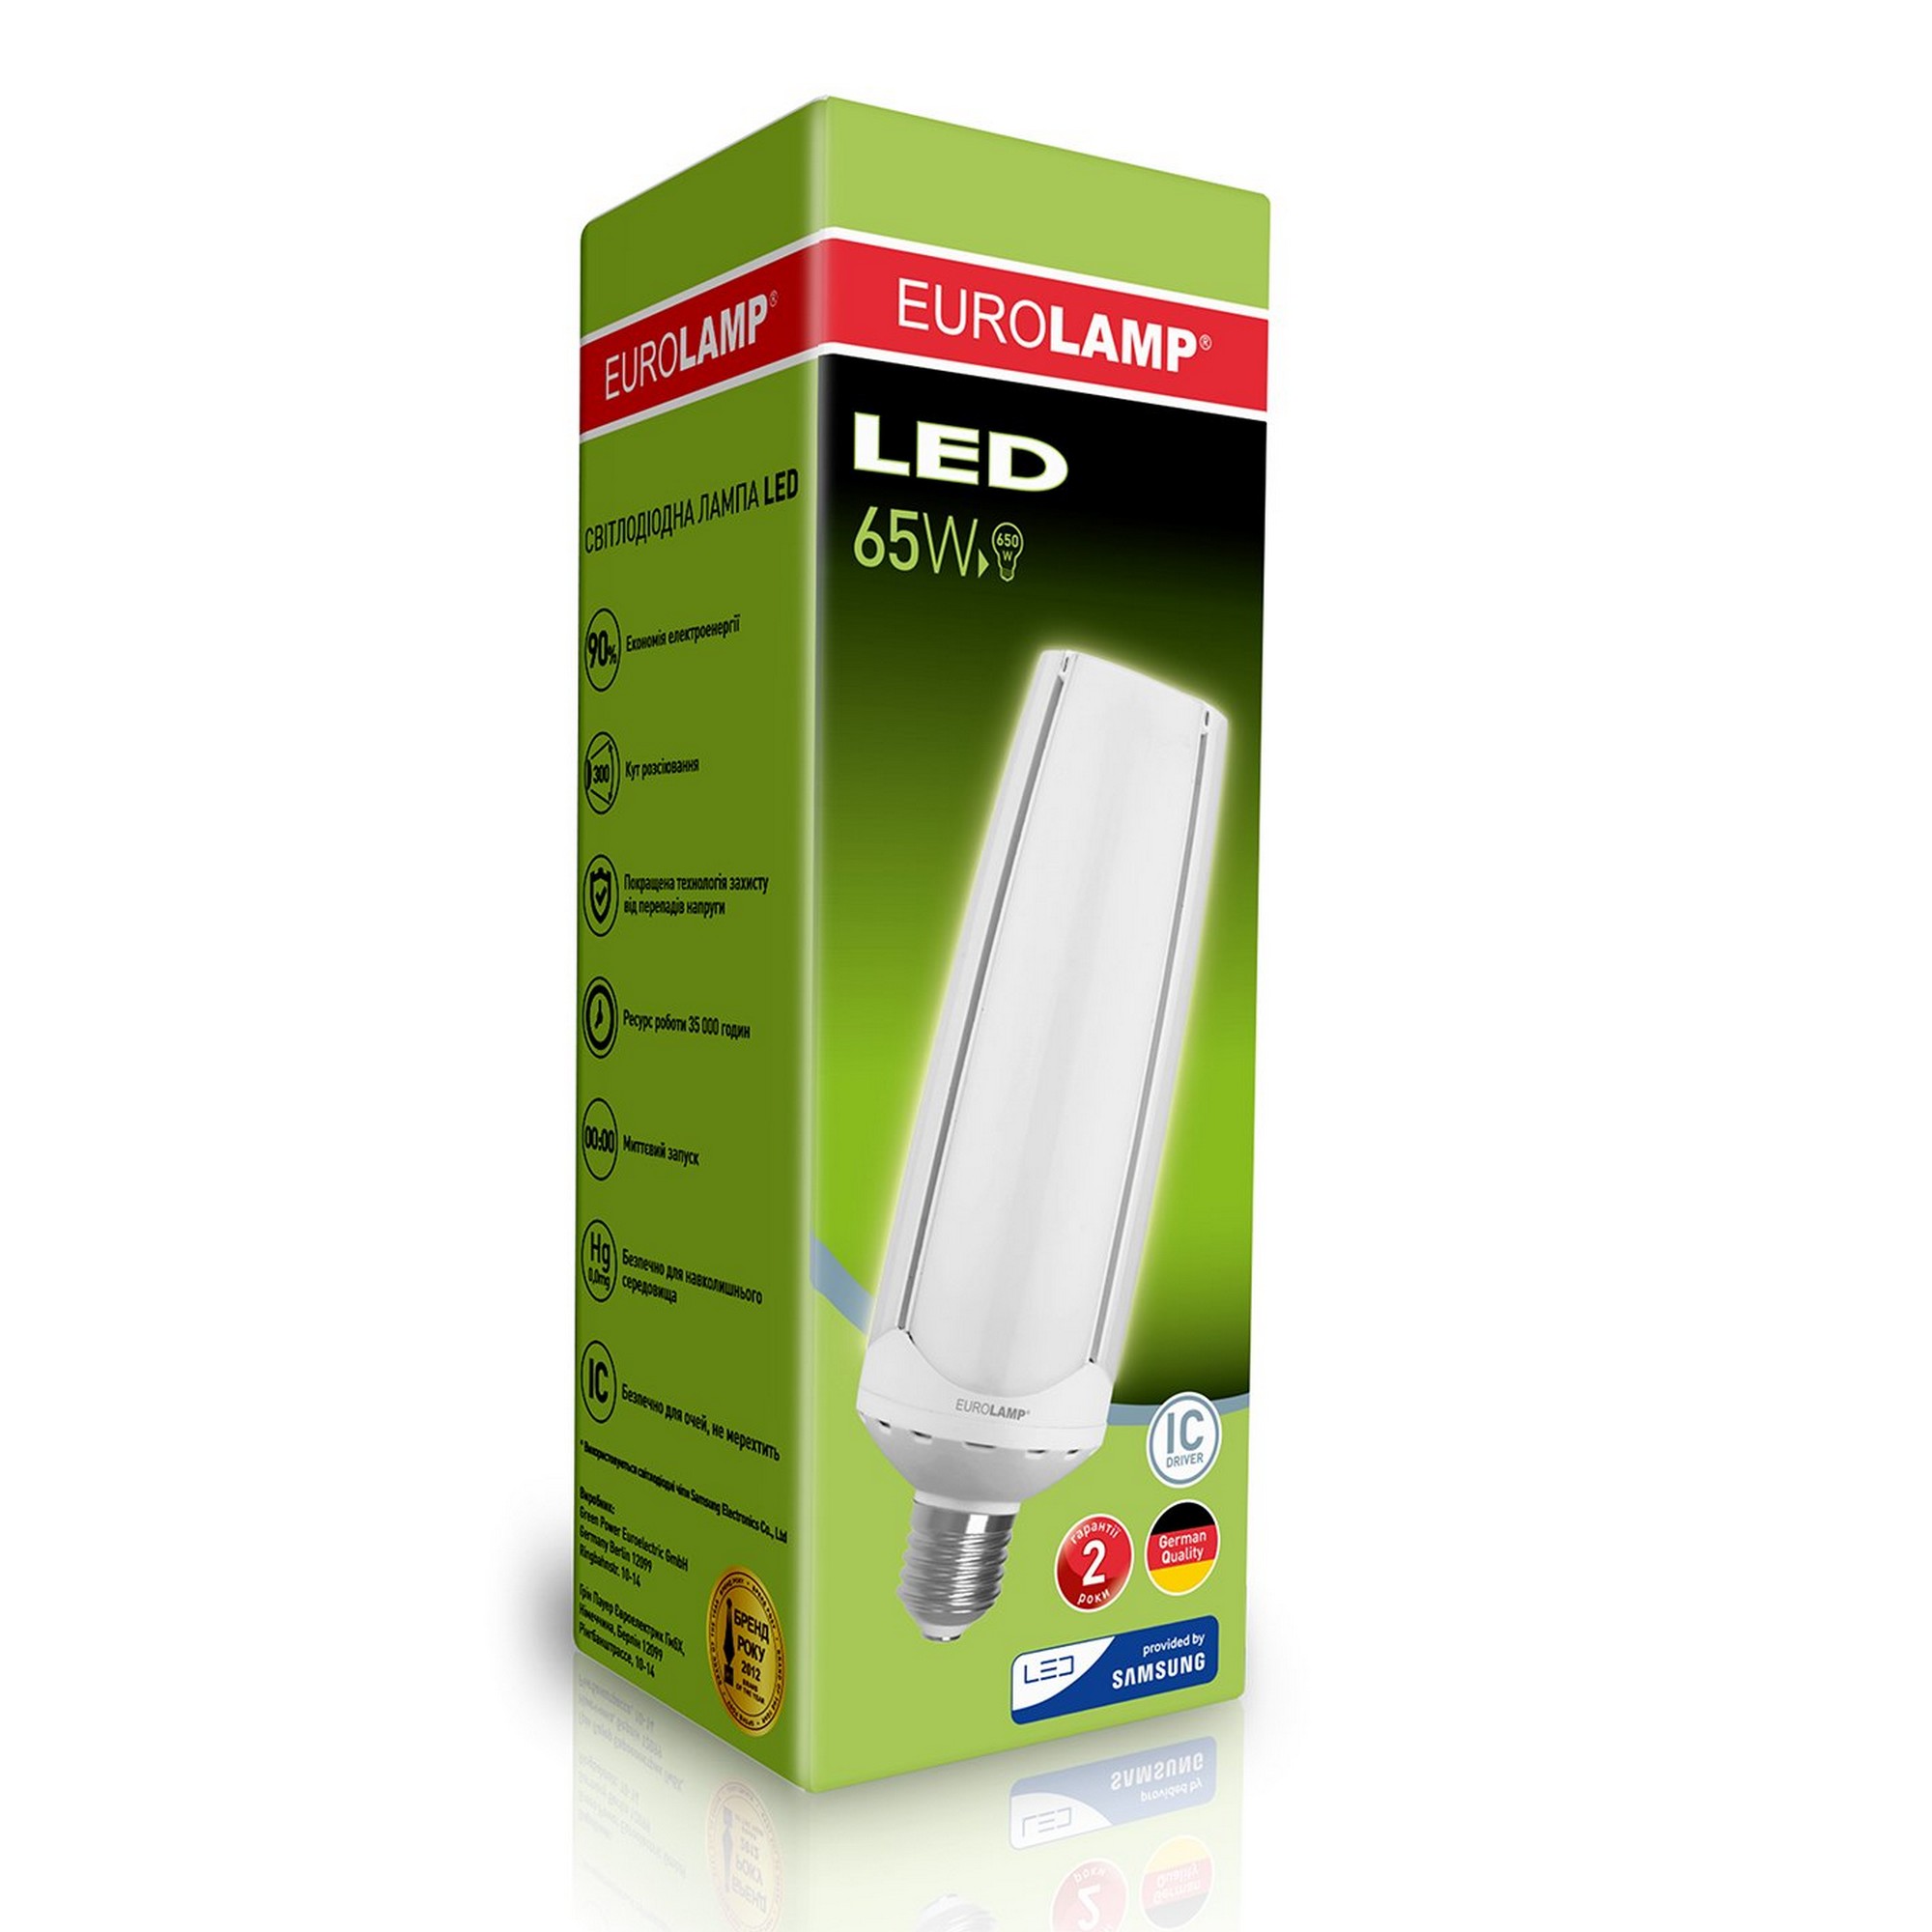 Лампа Eurolamp LED "ROCKET" 65W E40 6500K цена 0.00 грн - фотография 2